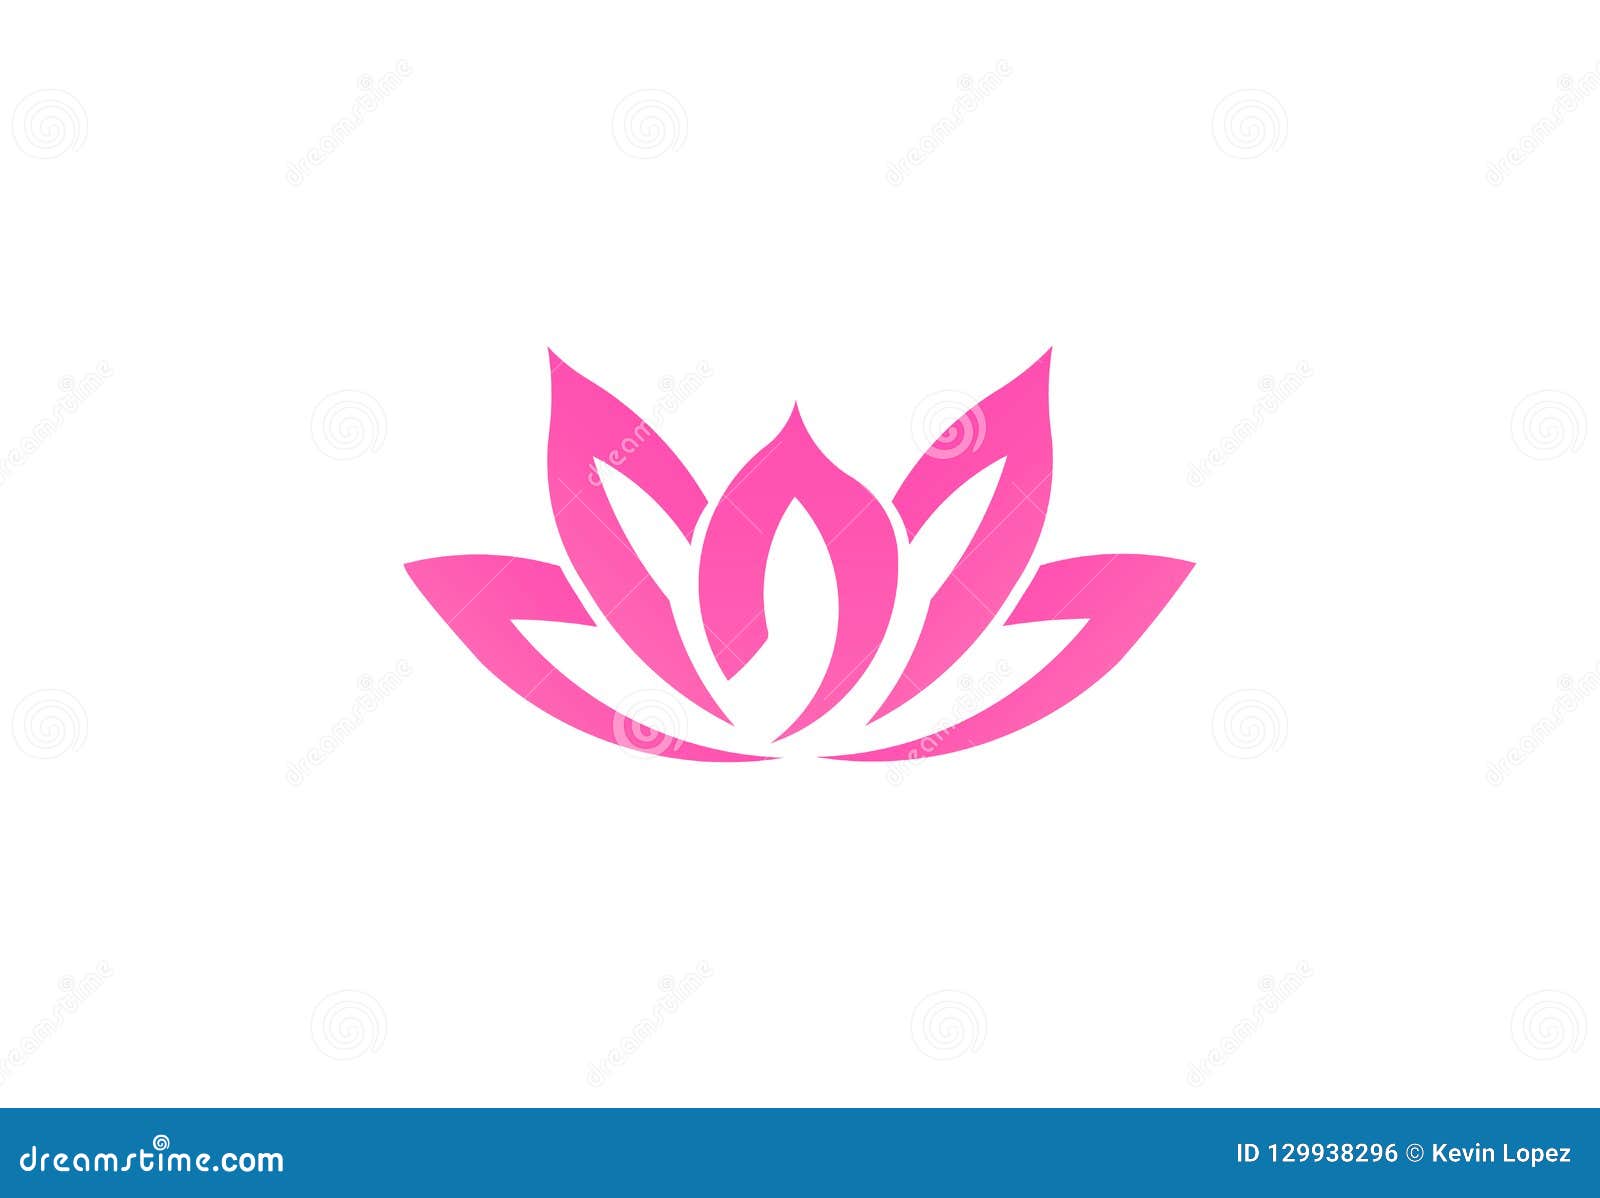  Pink  Lotus Flower  Business Vector Logo  Stock Vector 